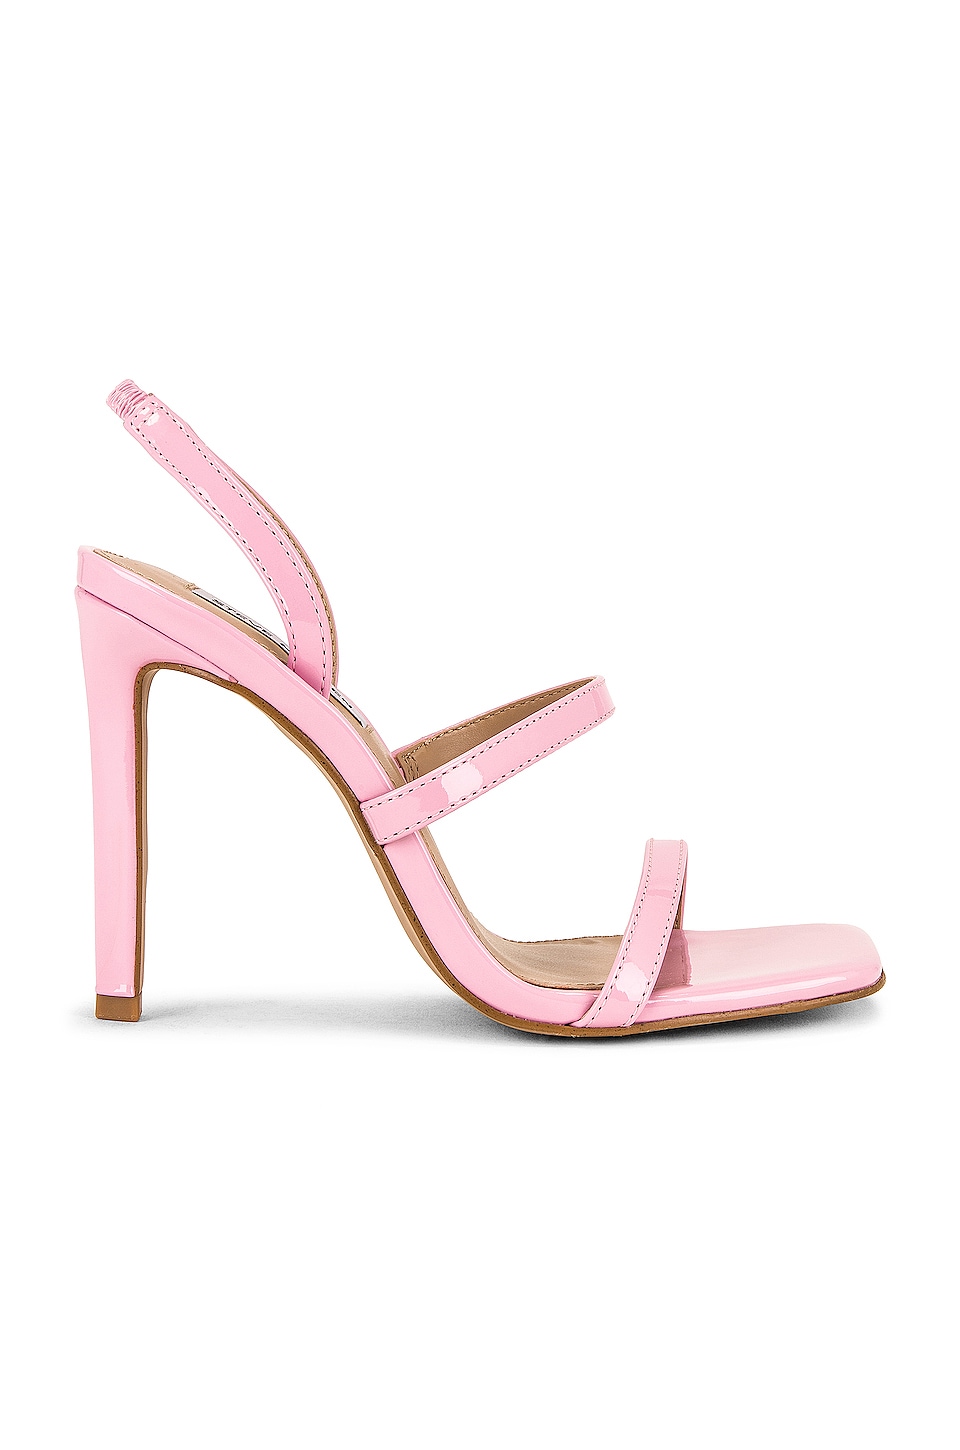 Steve Madden Gracey Sandal in Pink Patent | REVOLVE